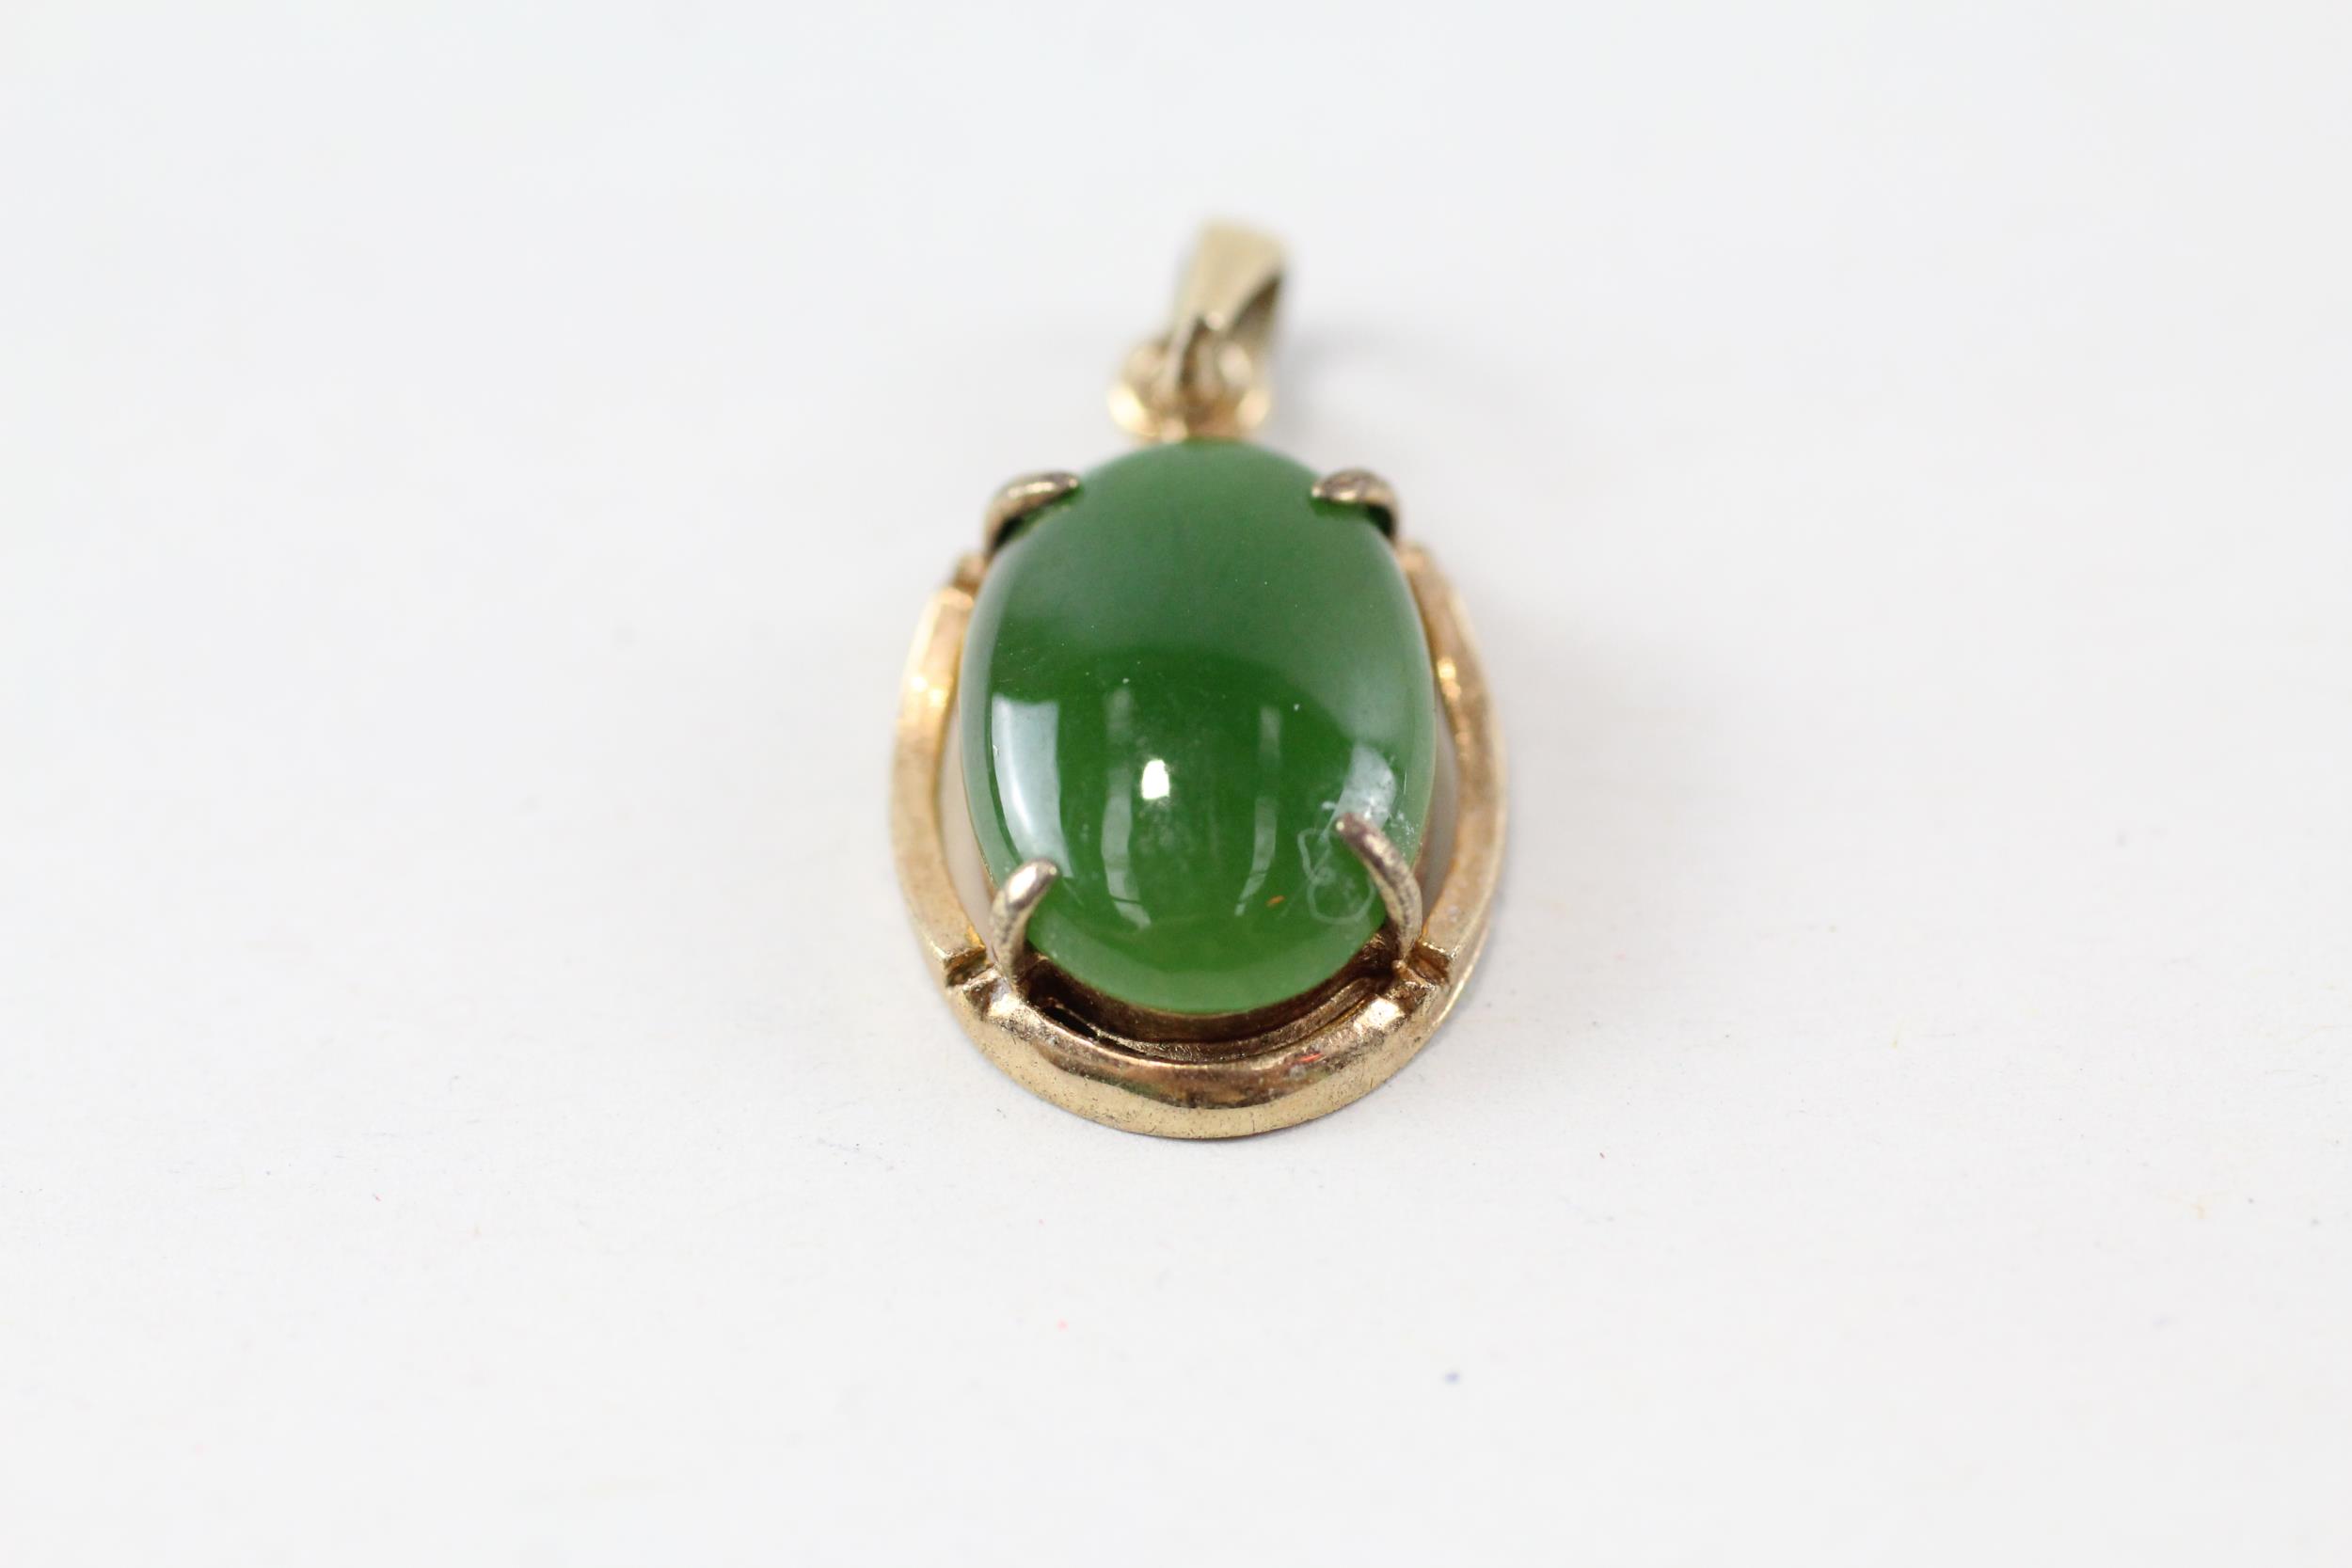 2x 9ct gold green gemstone pendants (3.3g) - Image 2 of 5